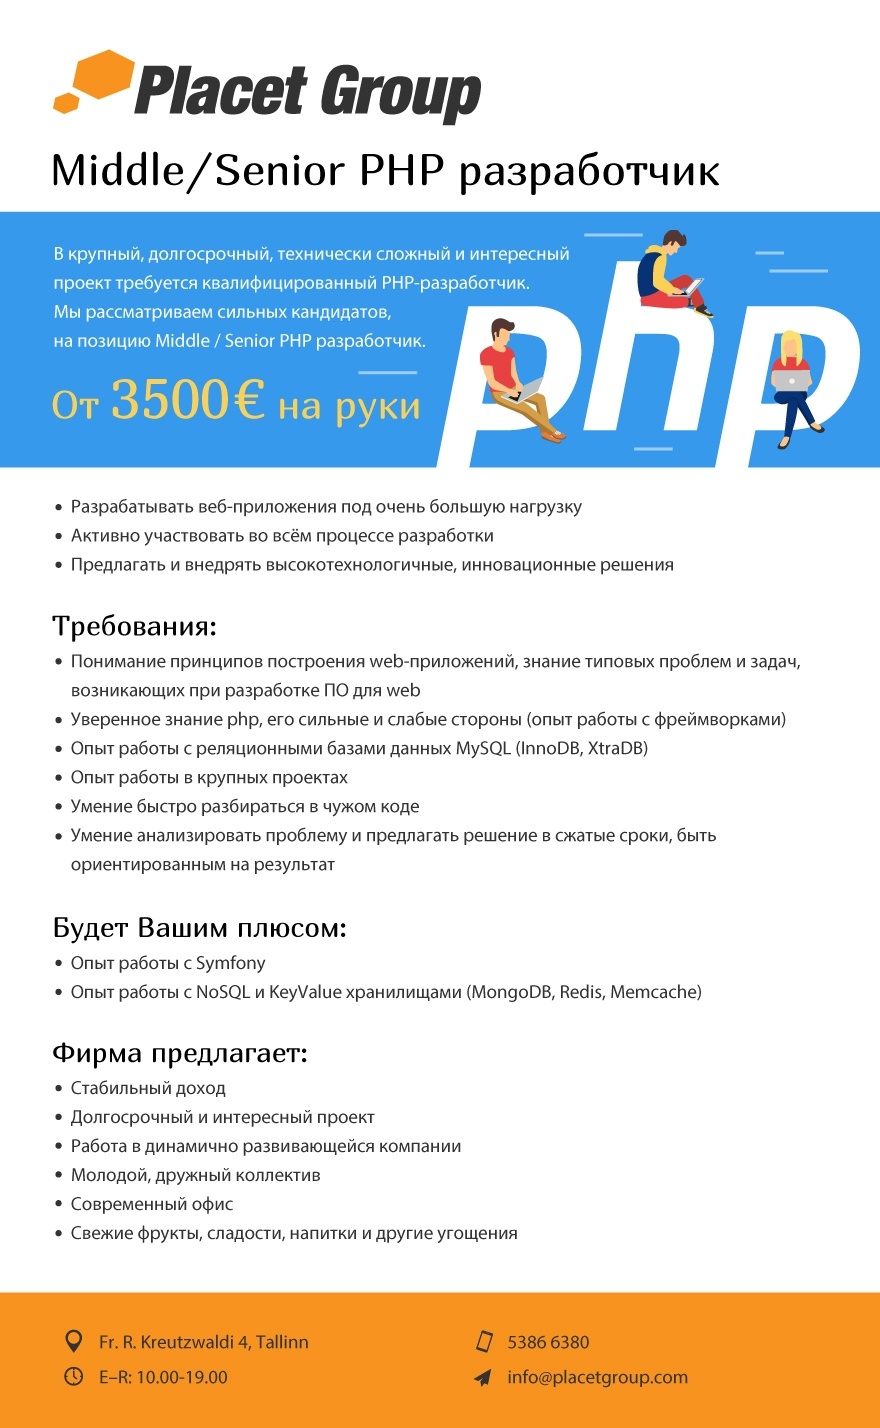 Placet Group OÜ Middle / Senior PHP  разработчик